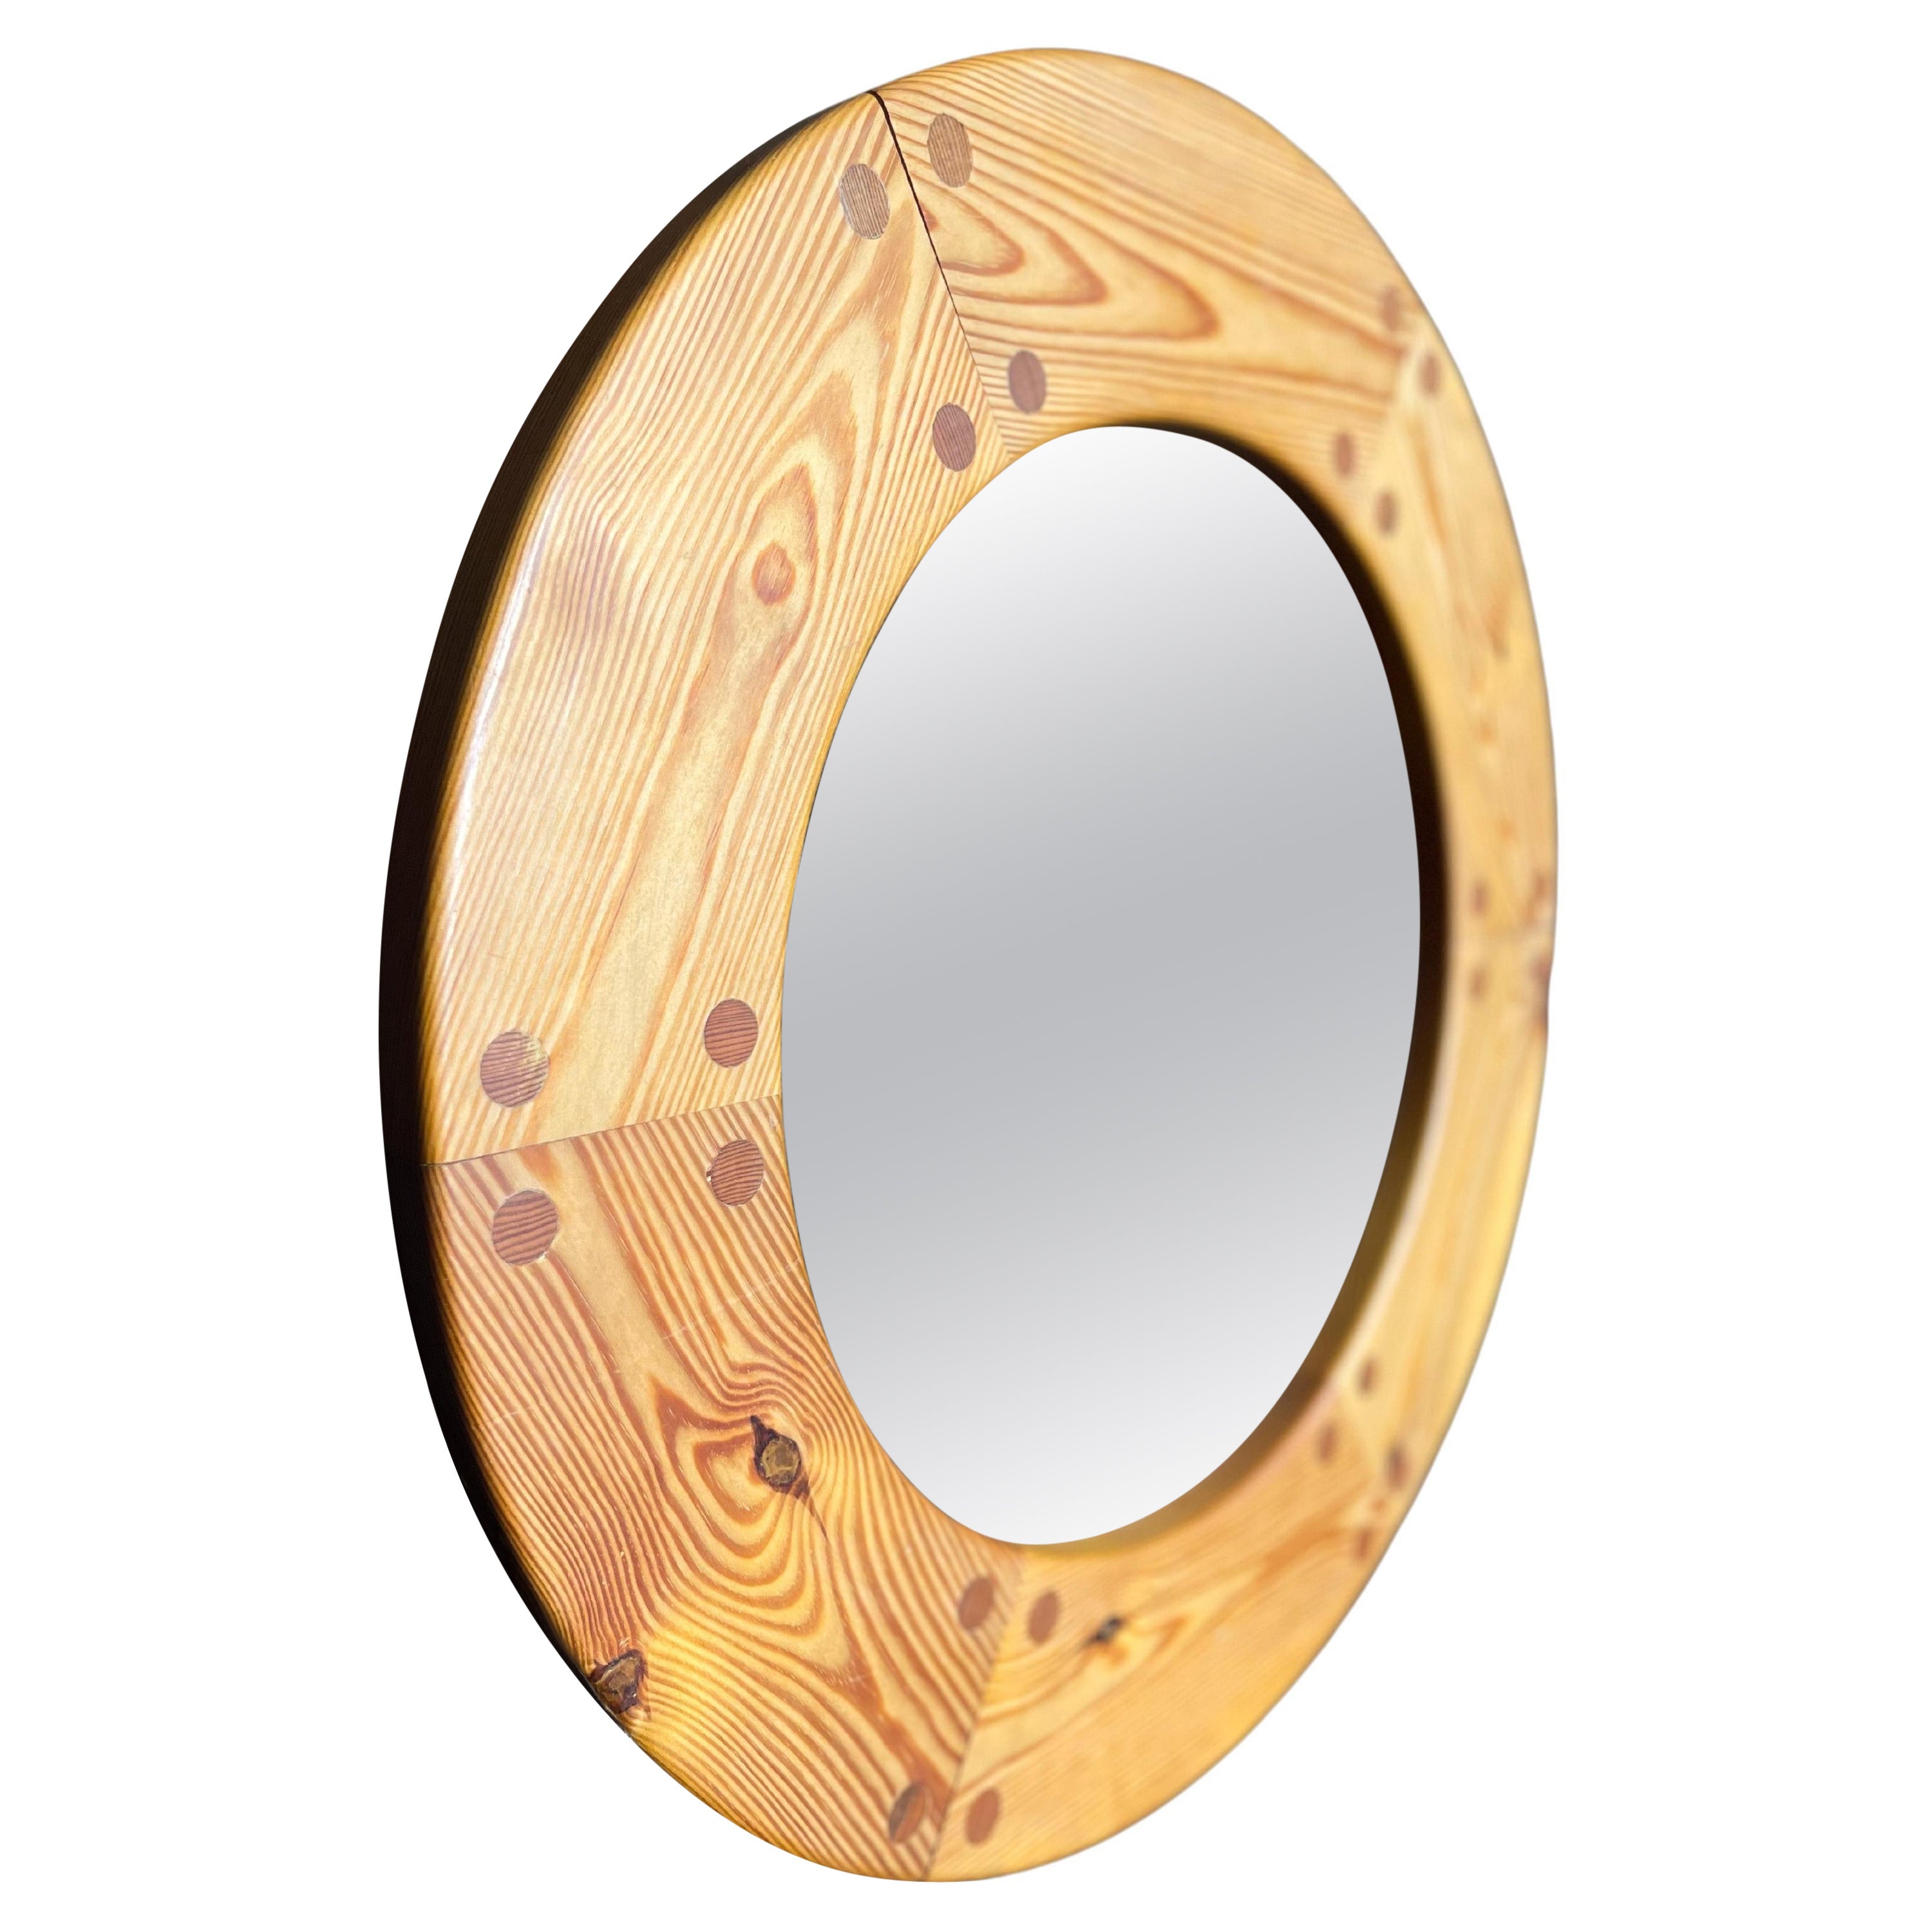 Danish Pine Pegged Round Nautical Style Mirror For Sale